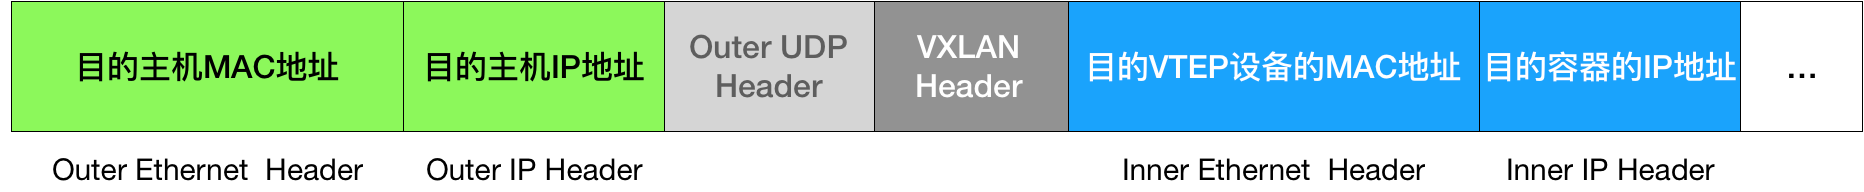 VxLAN Mode